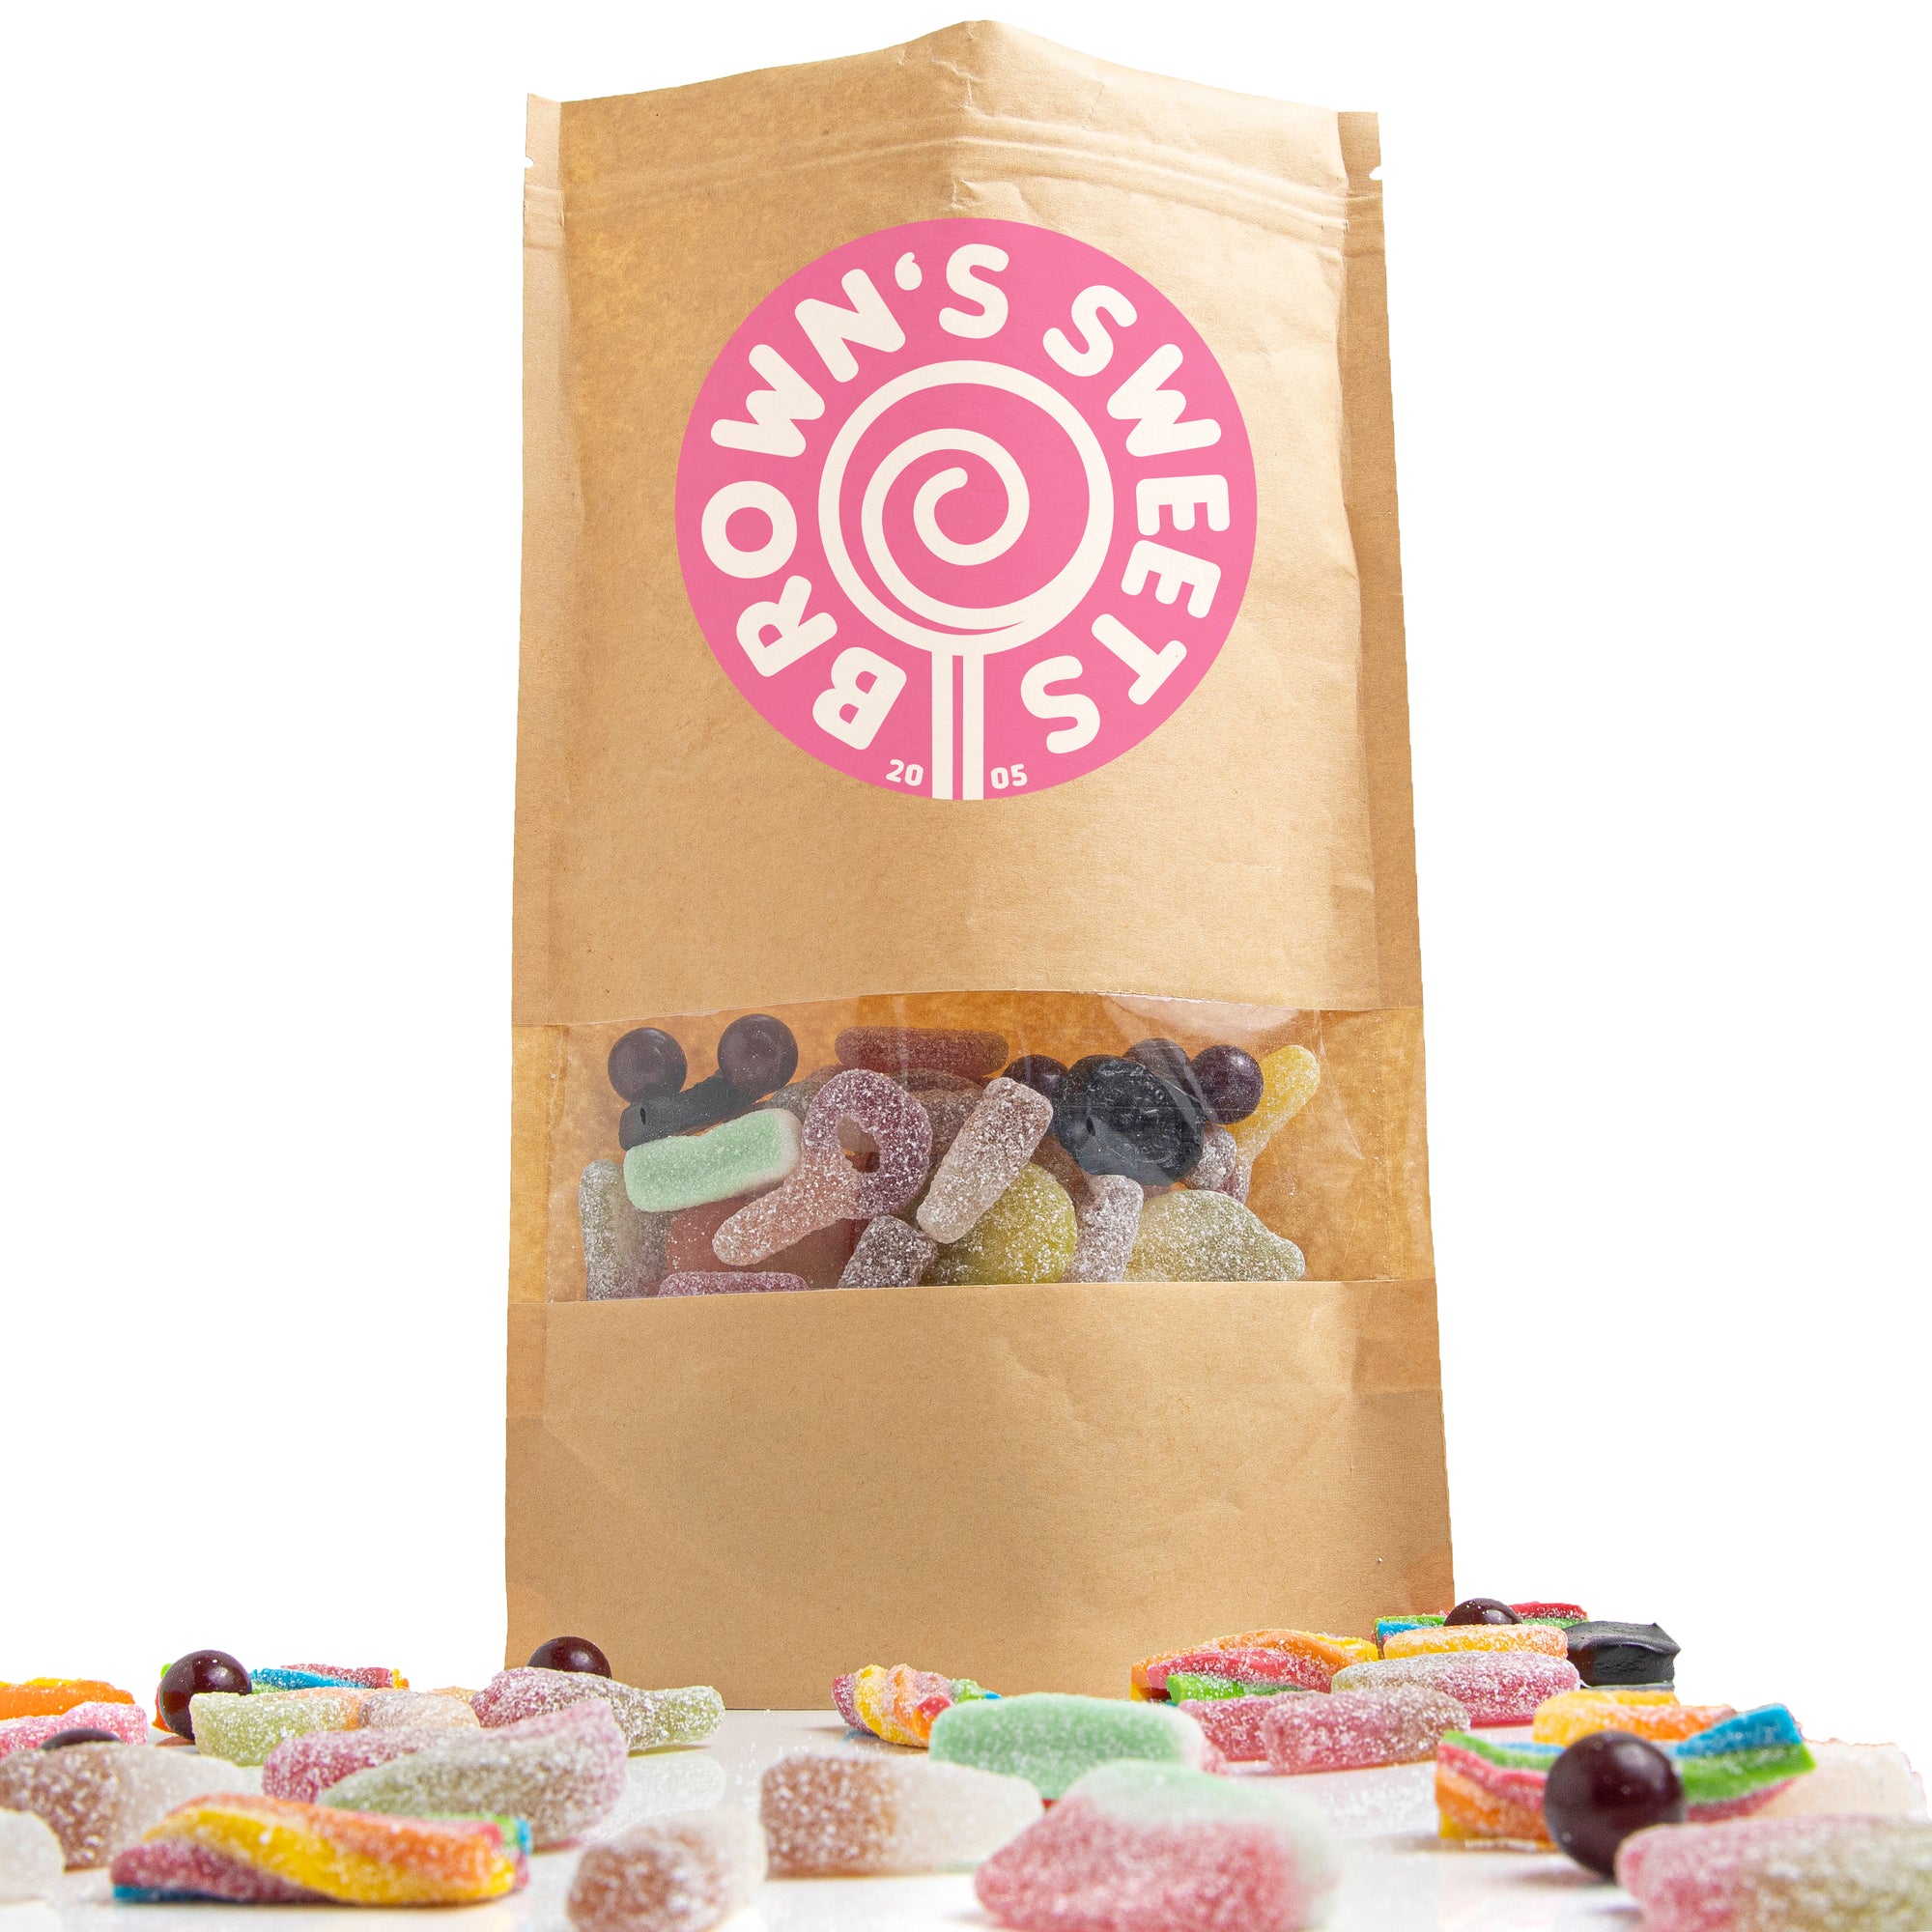 Skittles 1kg Bag – Browns Sweets